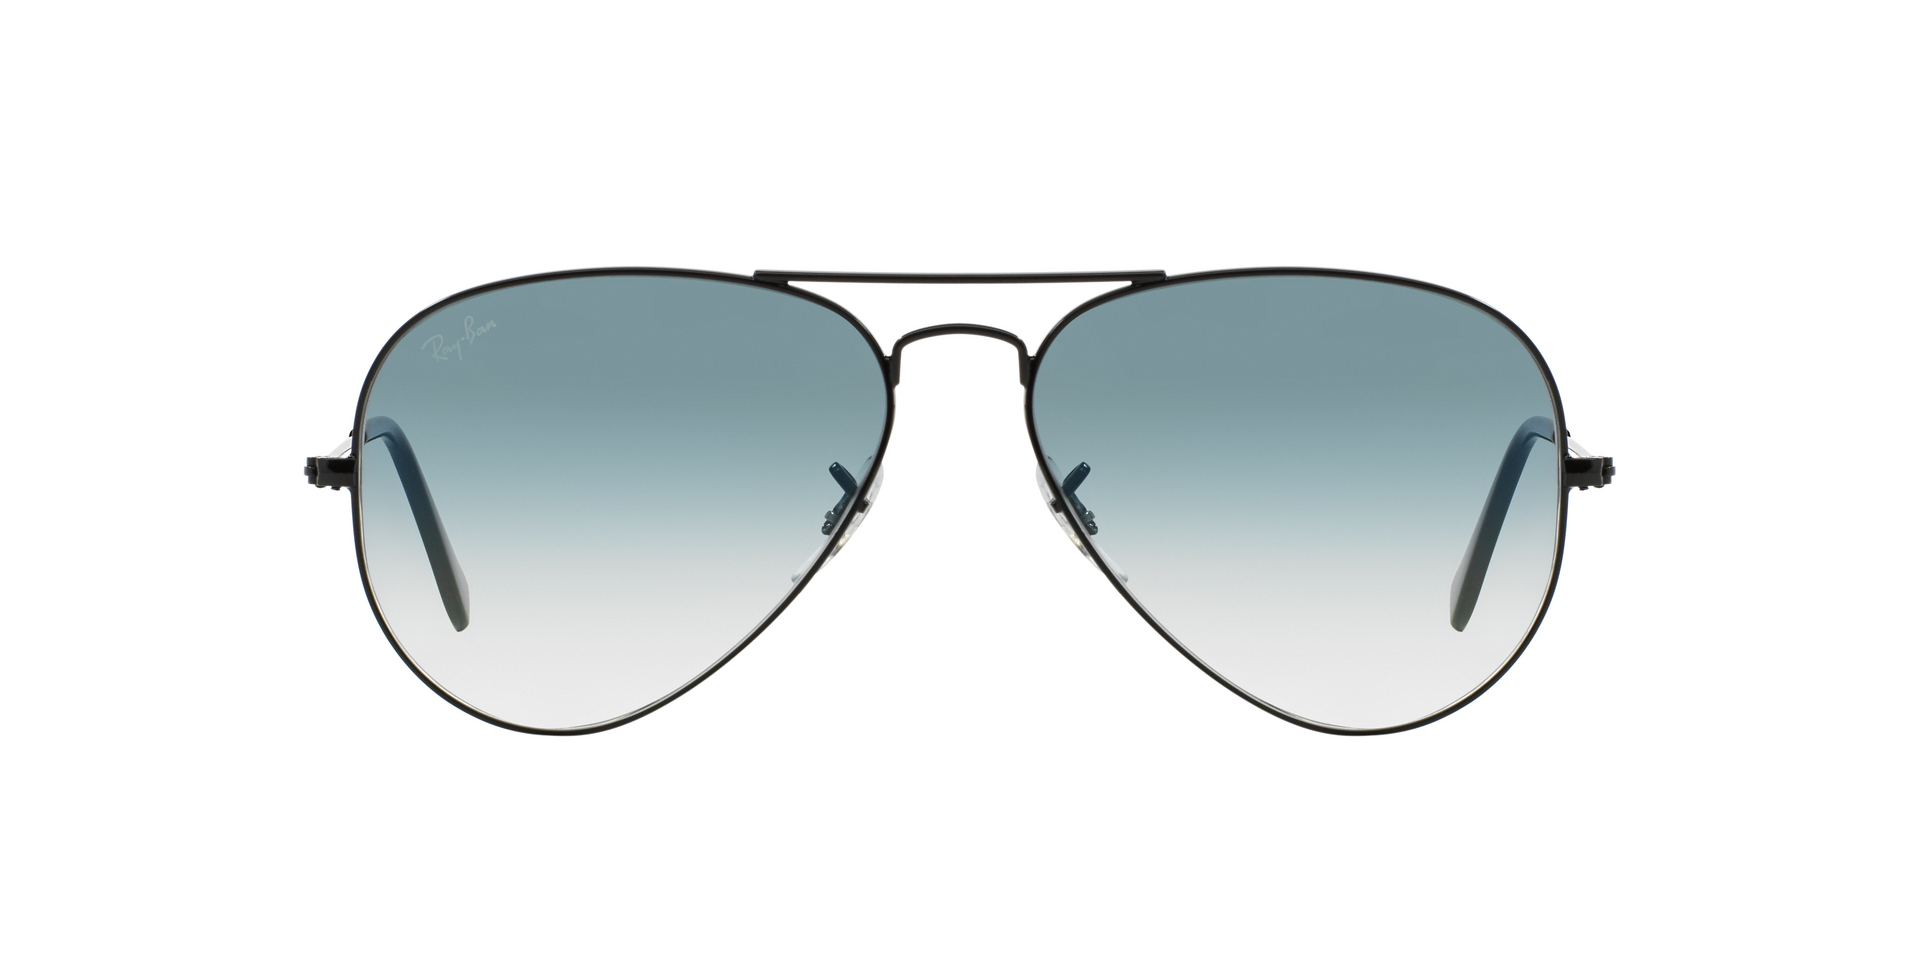 Buy Ray-Ban Aviator Gradient Sunglasses Online.